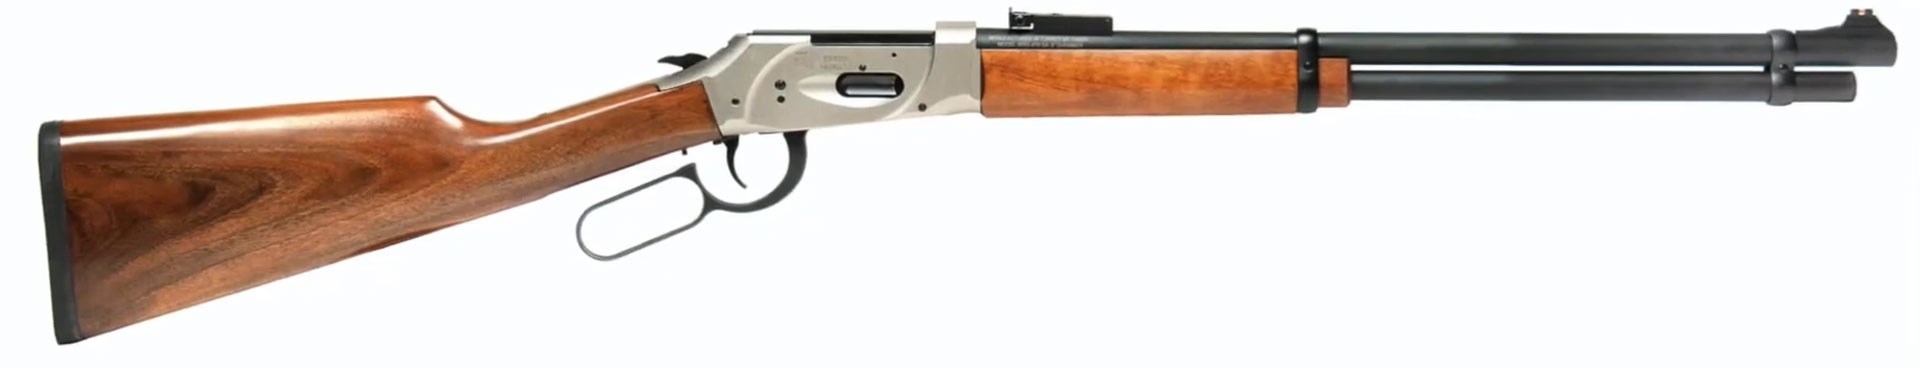 GForce Arms LVR410 lever action rifle.